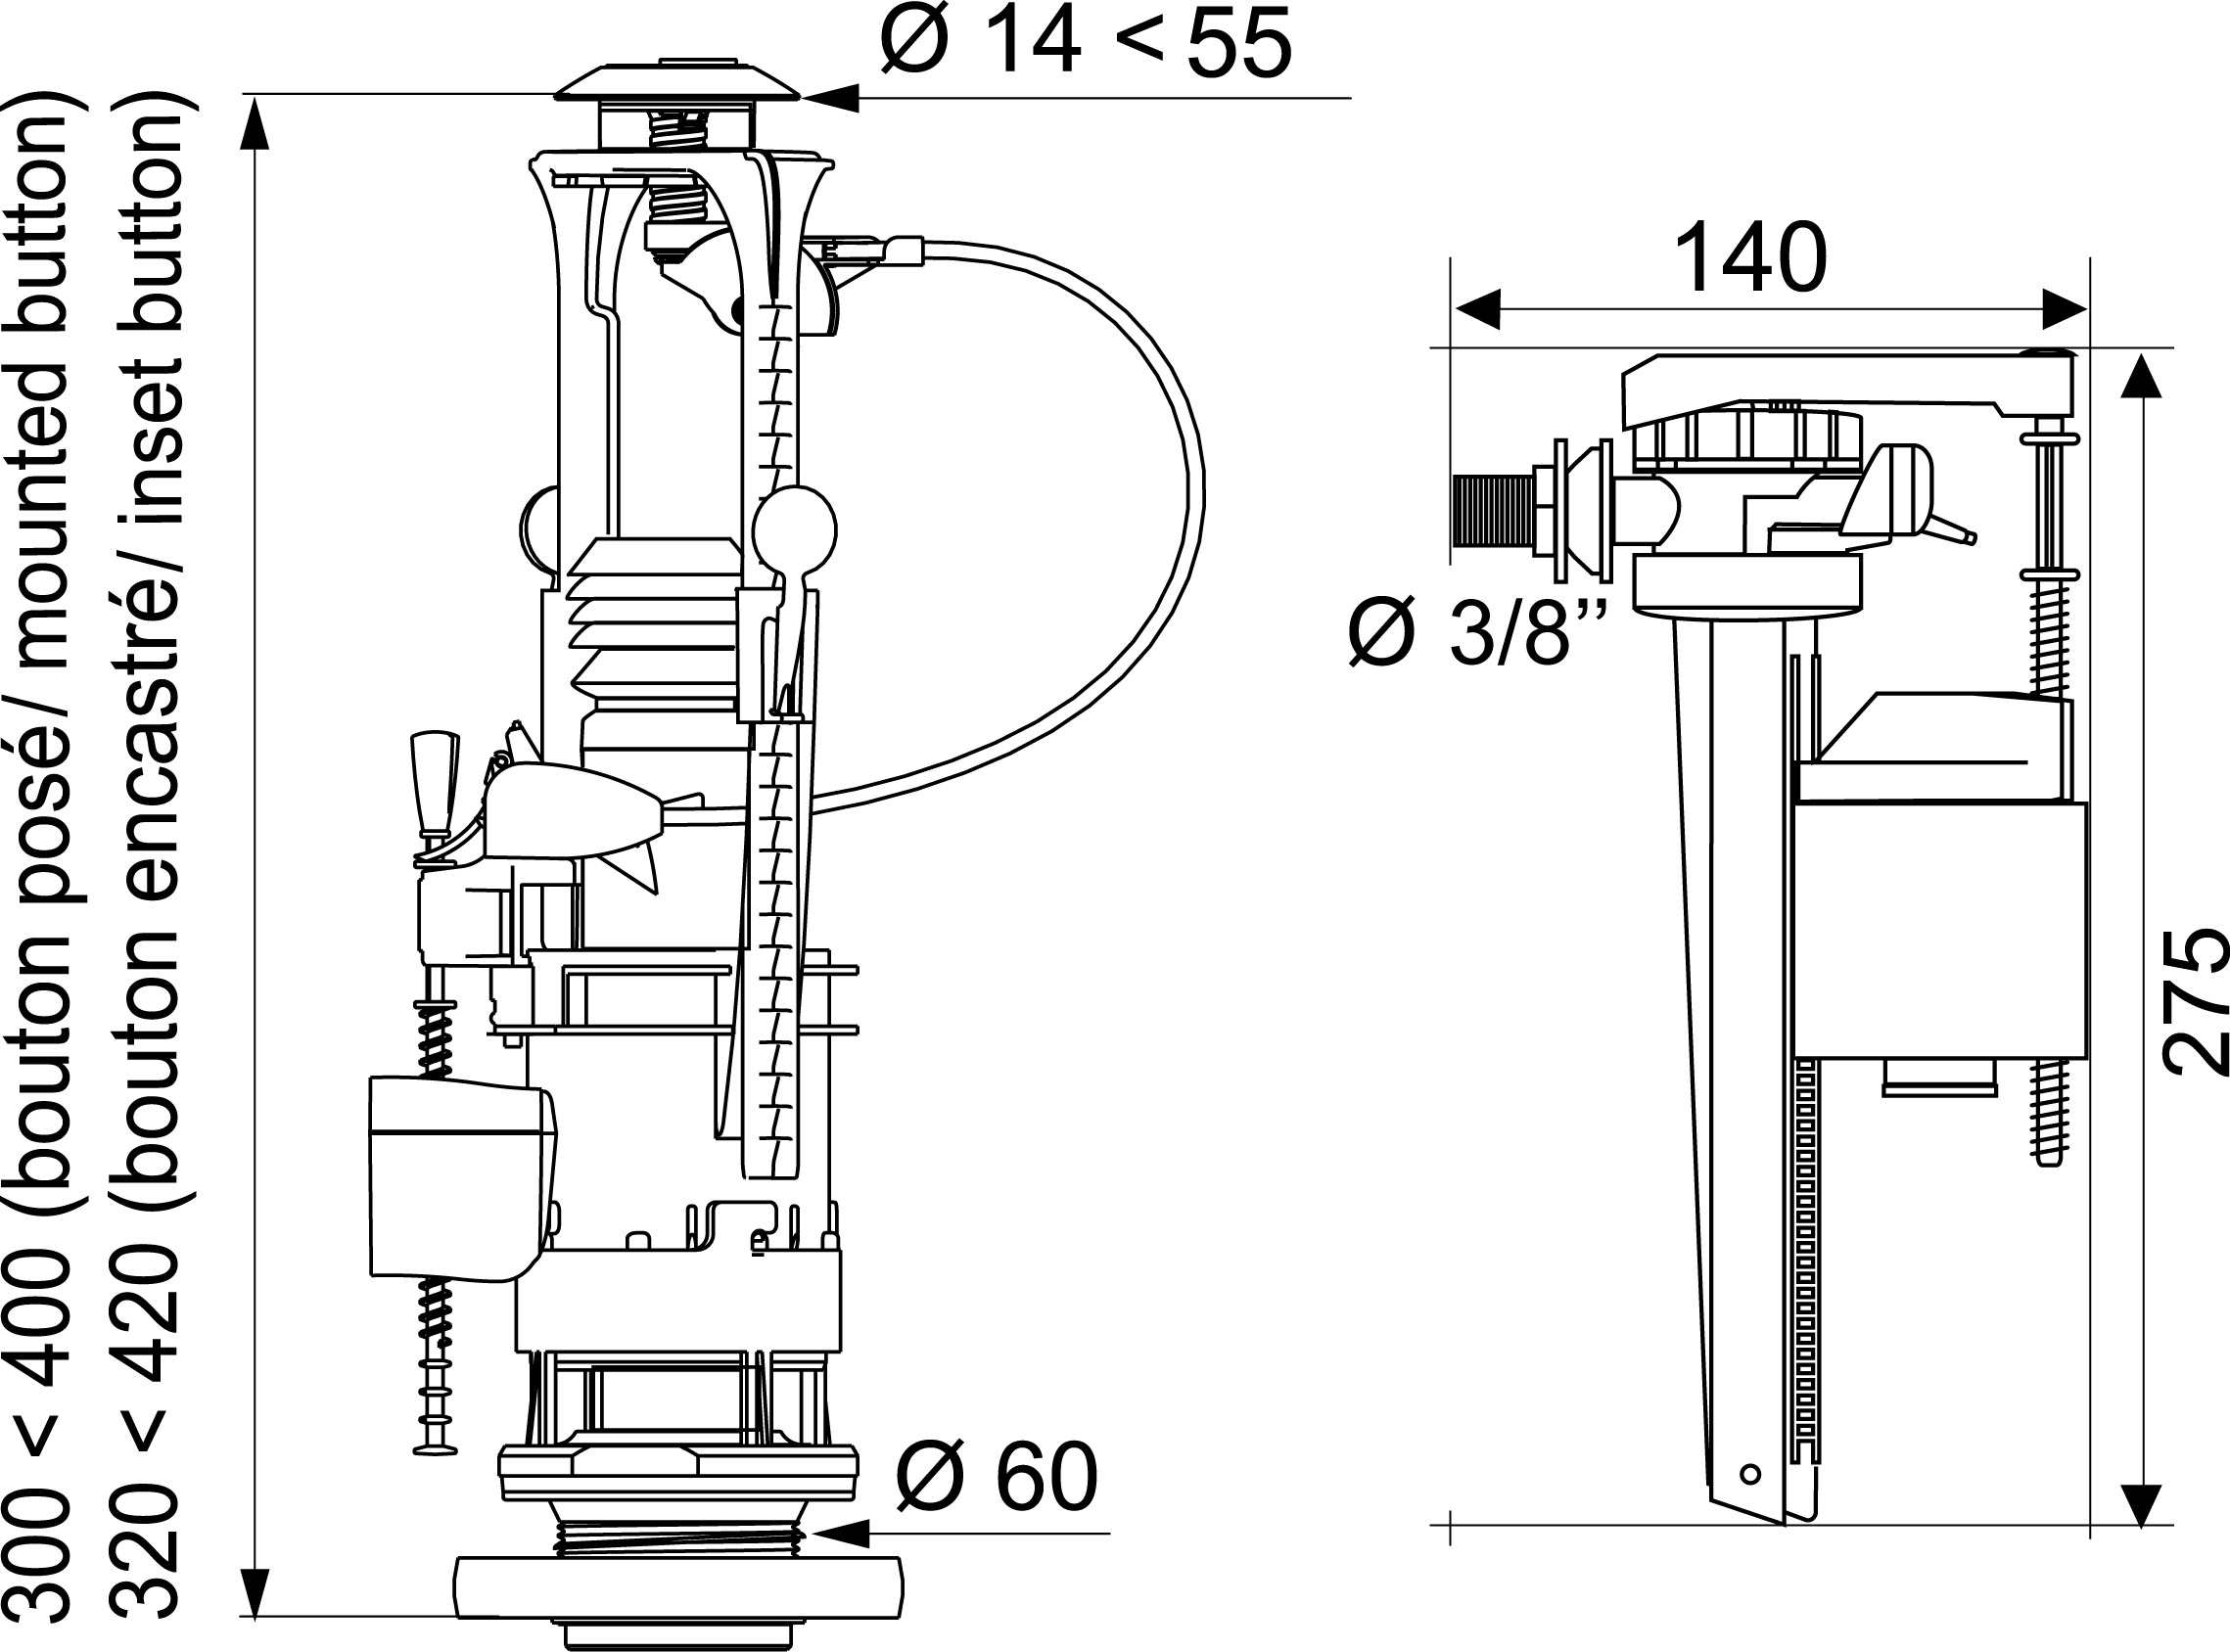 instructions montage robinet autoperceur - Robinetterie Hammel